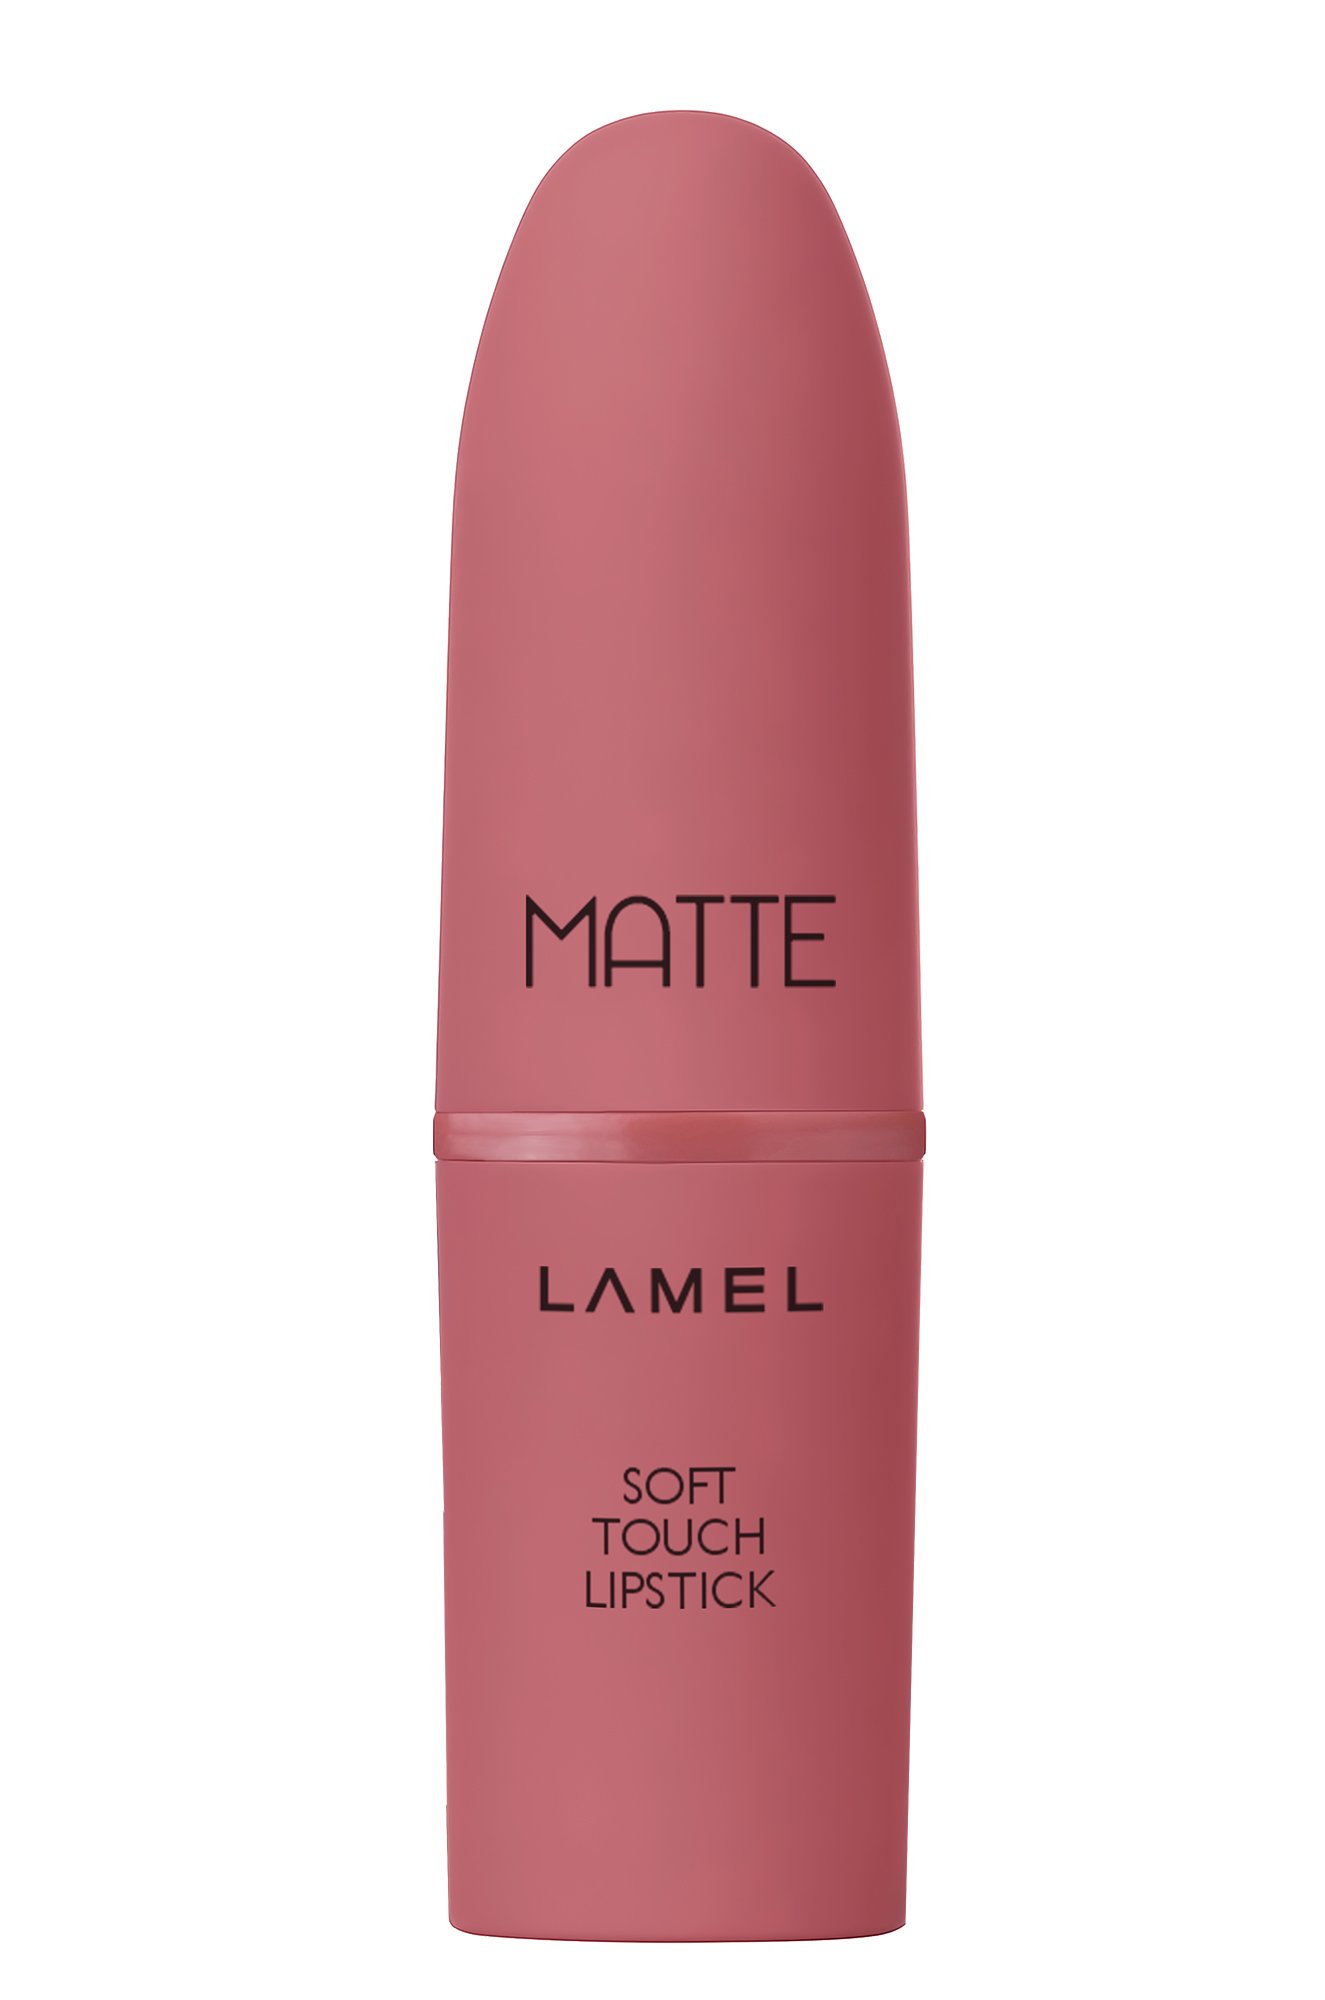 Помада матовая для губ Matte Soft Touch Lipstick т.404 pink matinee 3,8 г LAMEL Professional